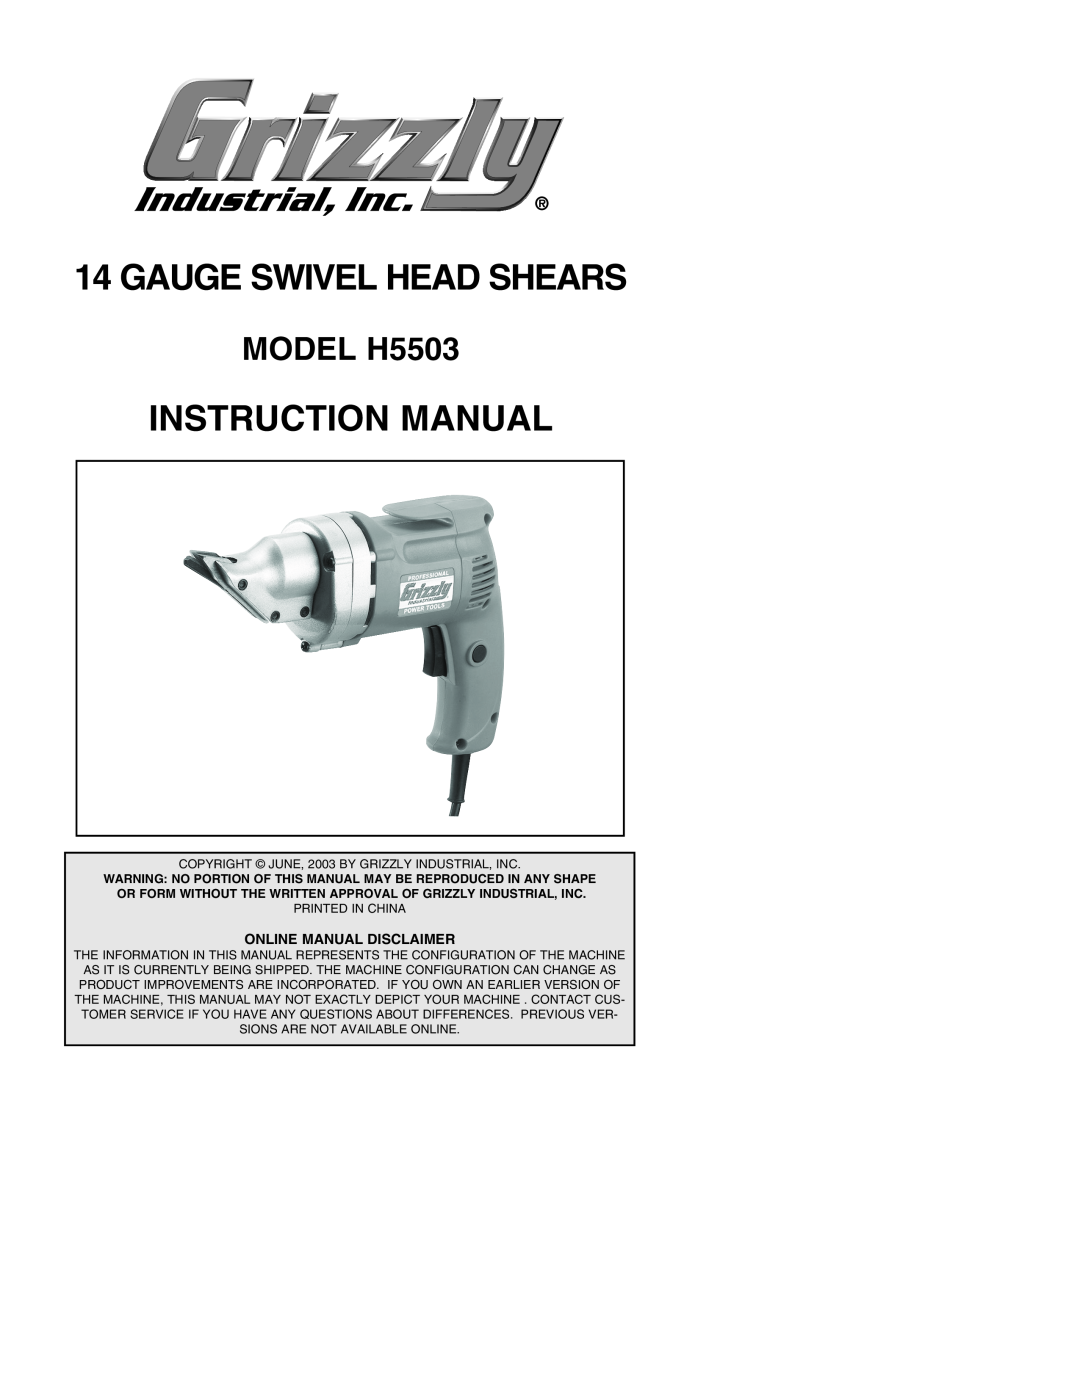 Grizzly instruction manual Gauge Swivel Head Shears, Instruction Manual, MODEL H5503 